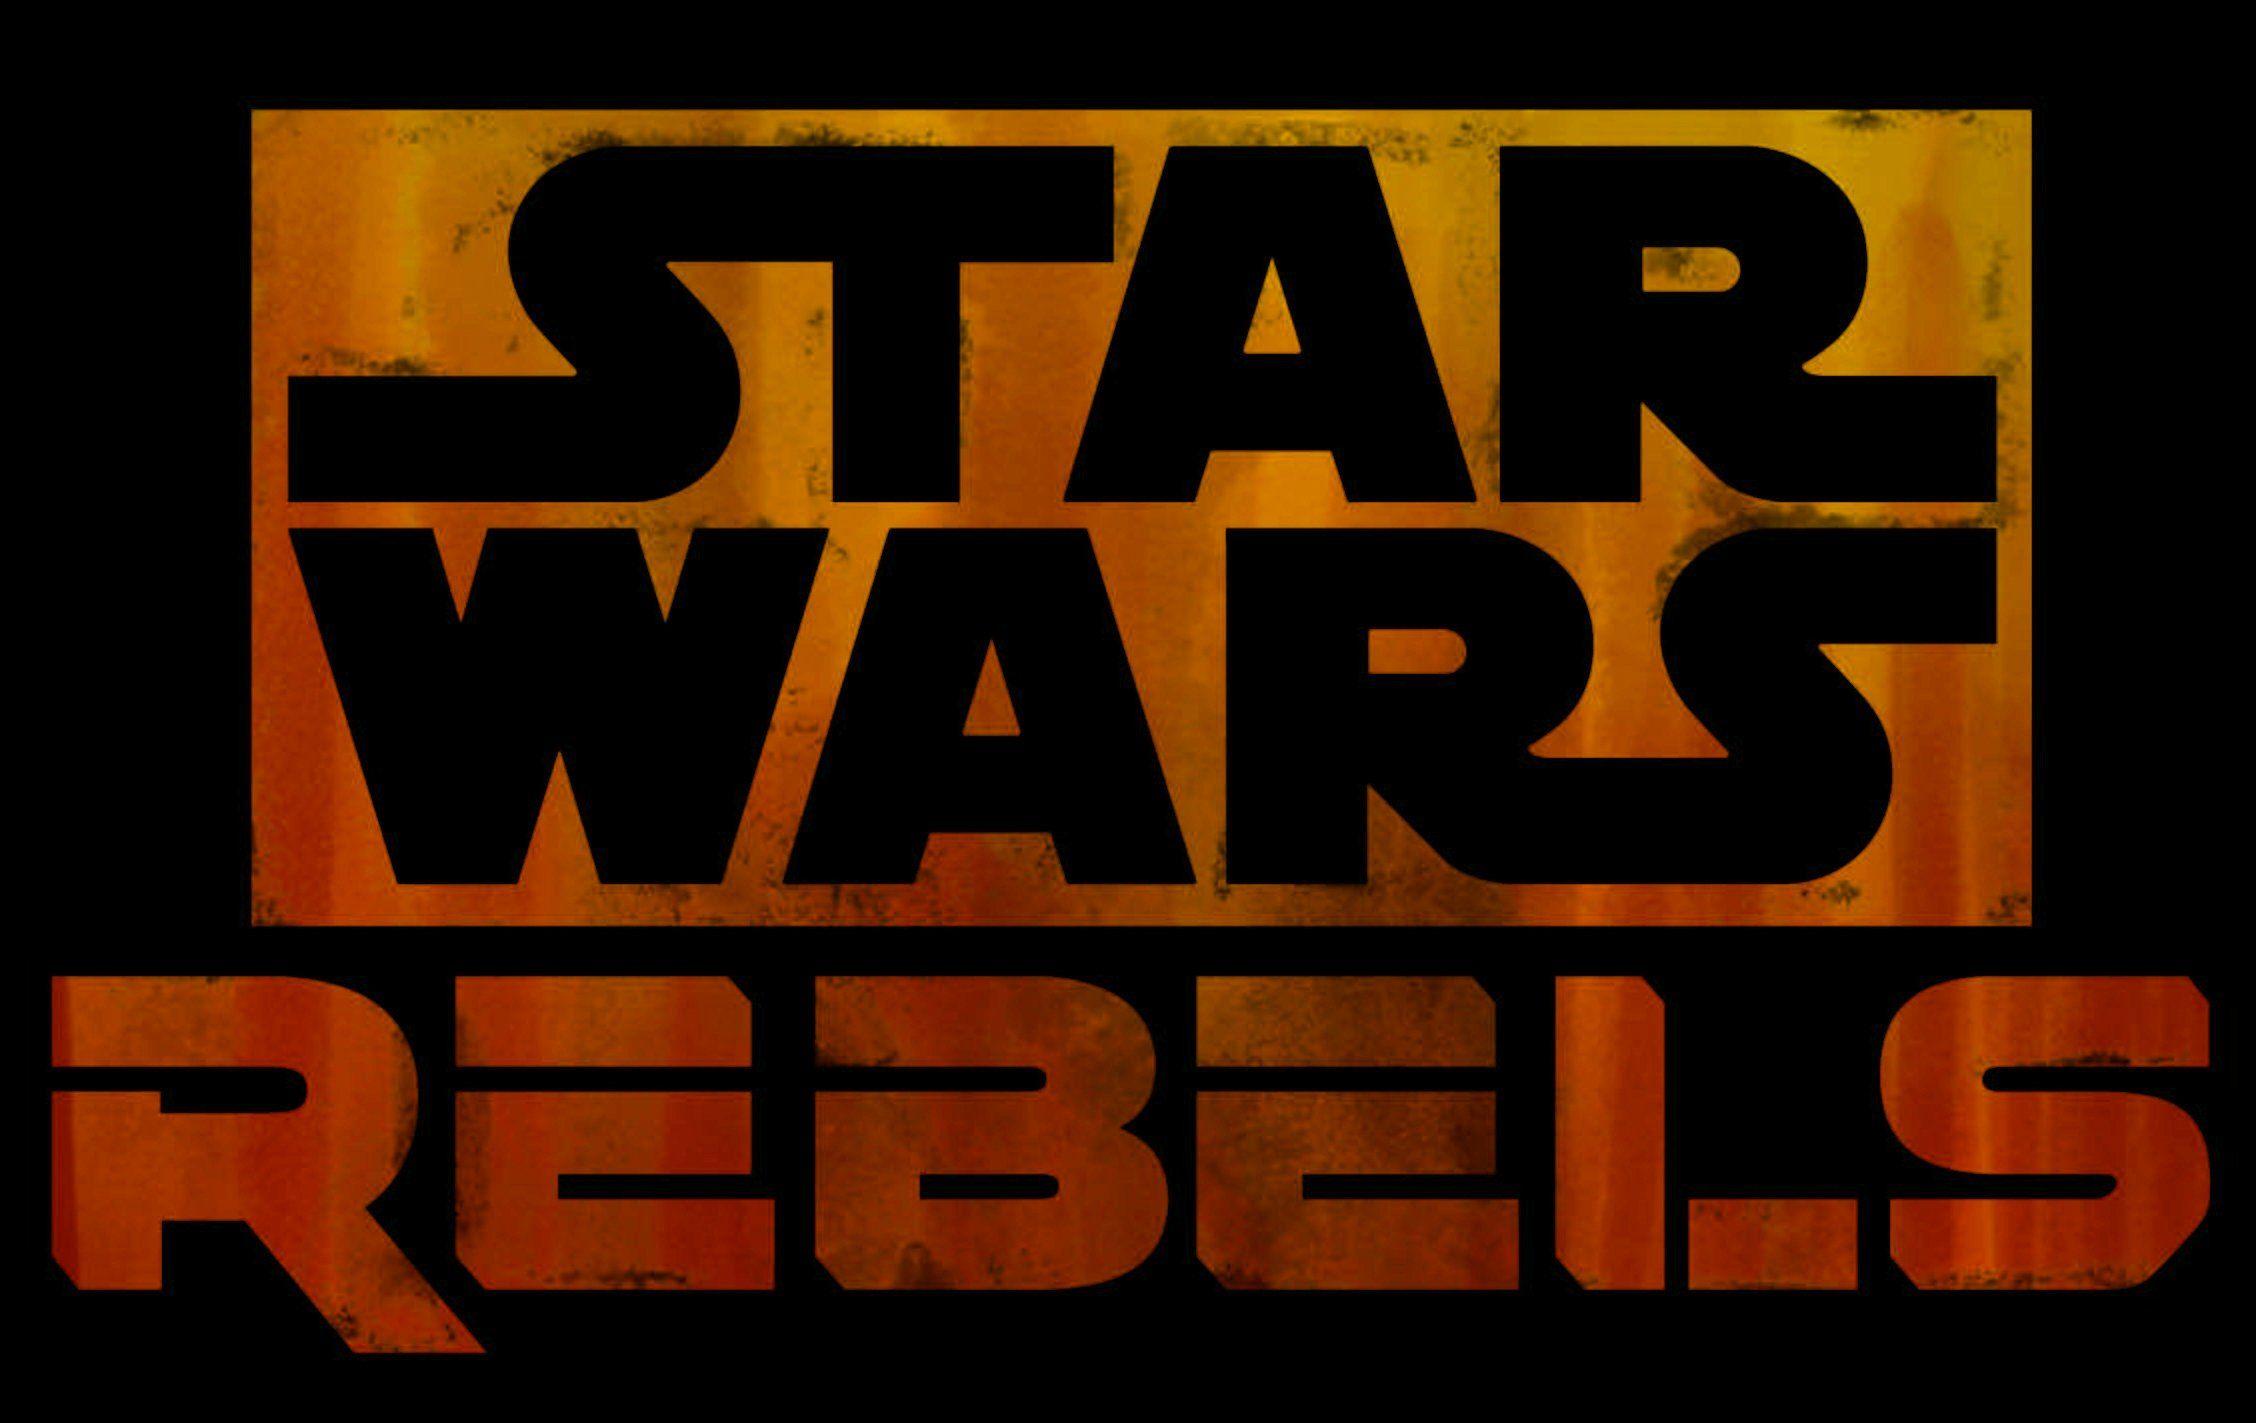 STAR WARS REBELS Animated Series Sci Fi Disney Action Adventure